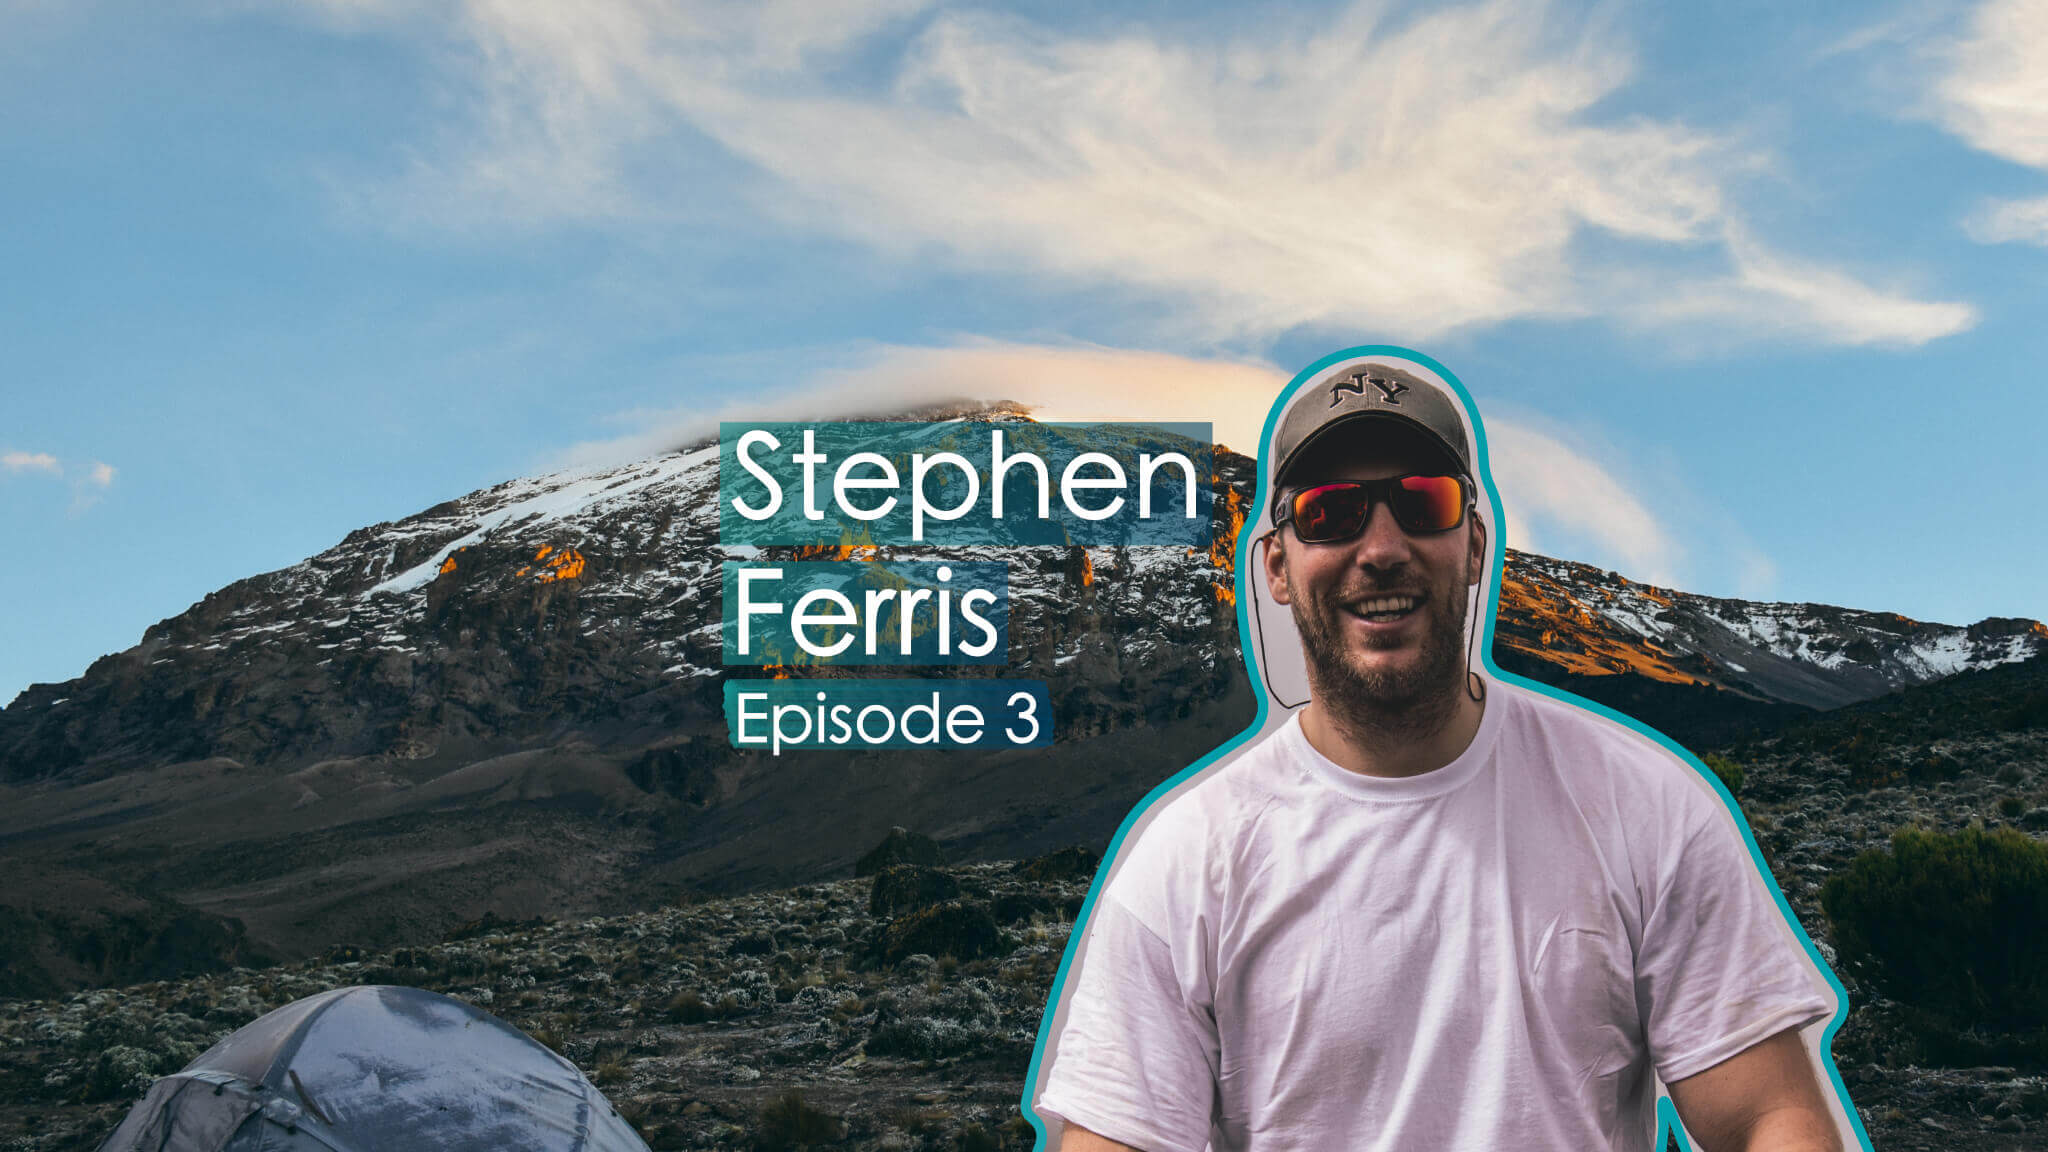 Earth's Edge Podcast Stephen Ferris